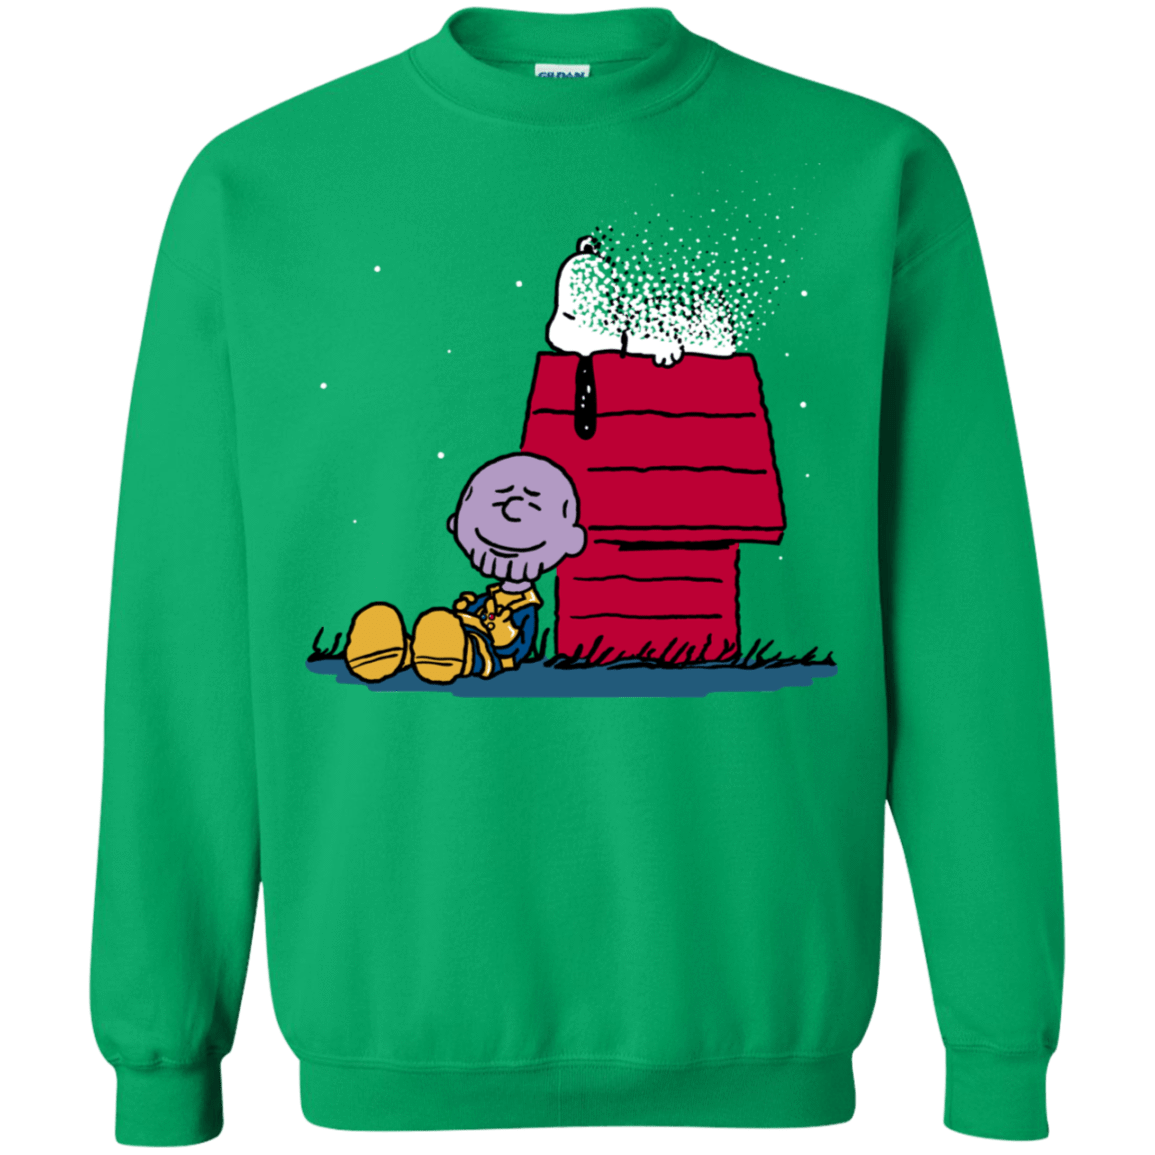 Sweatshirts Irish Green / S Snapy Crewneck Sweatshirt